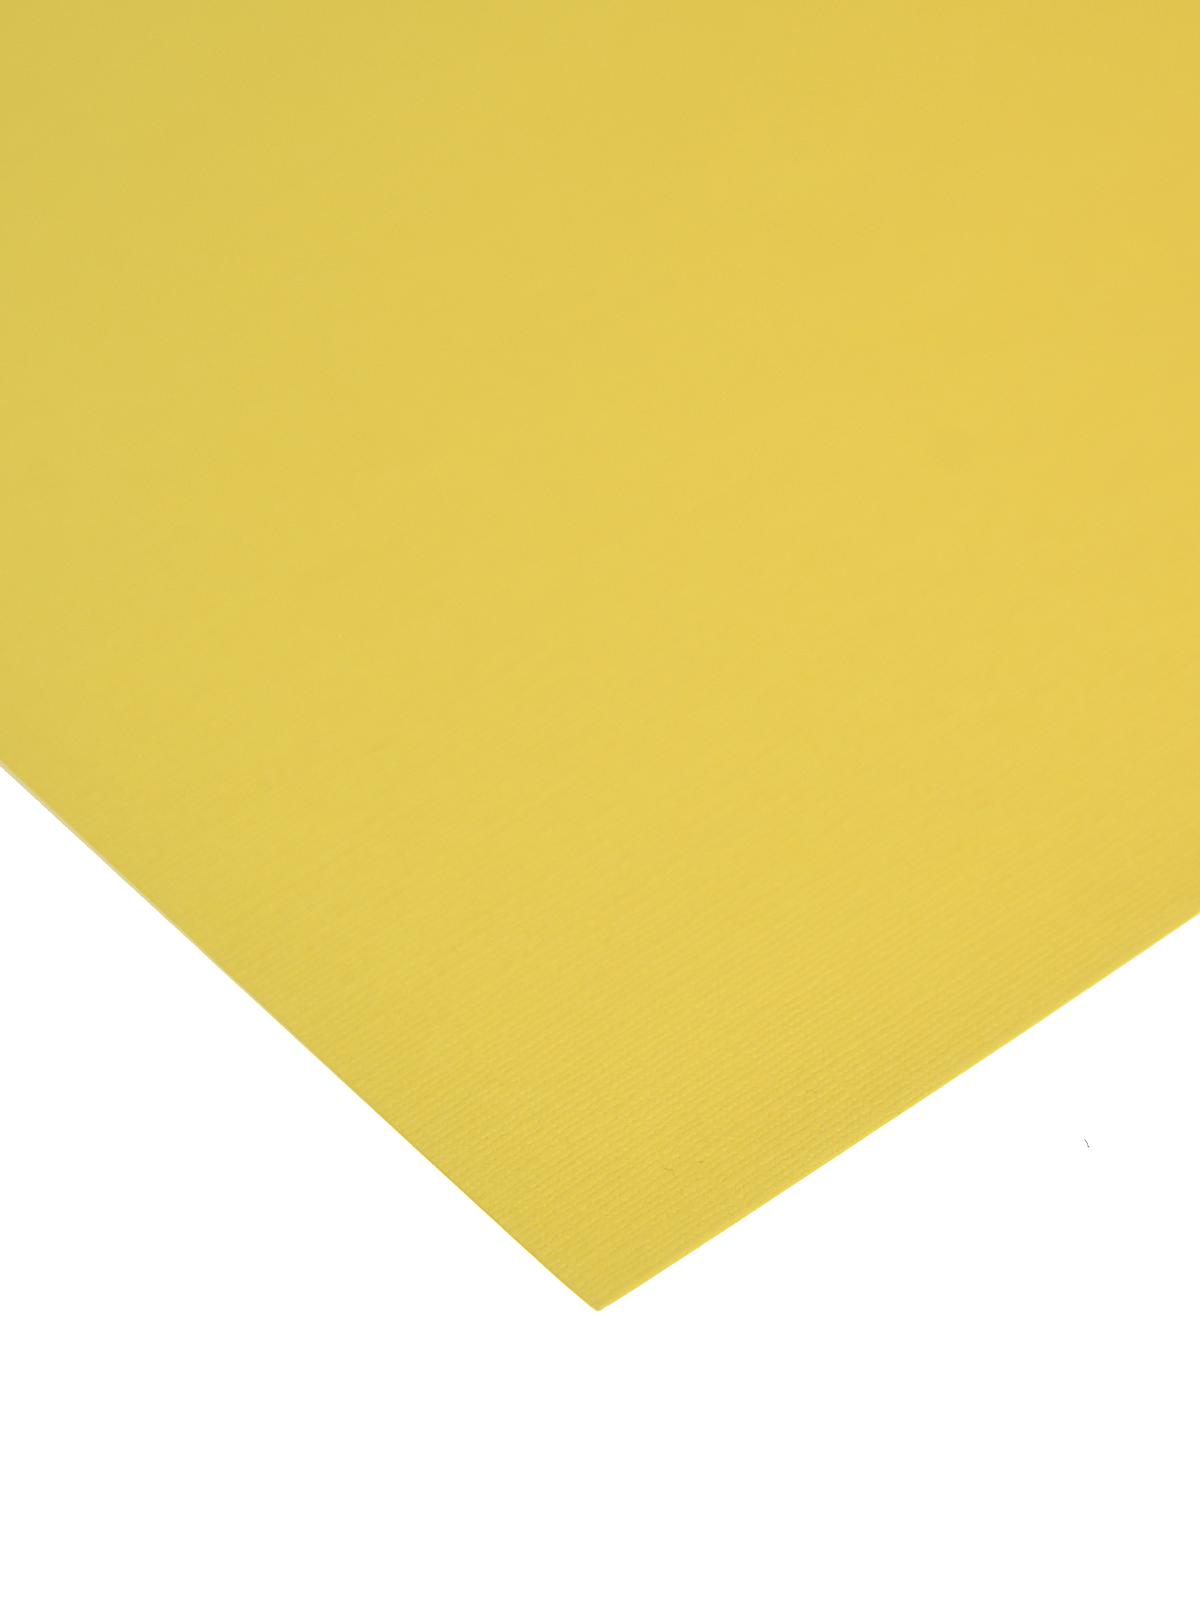 80 Lb. Canvas 8.5 In. X 11 In. Sheet Yellow Corn